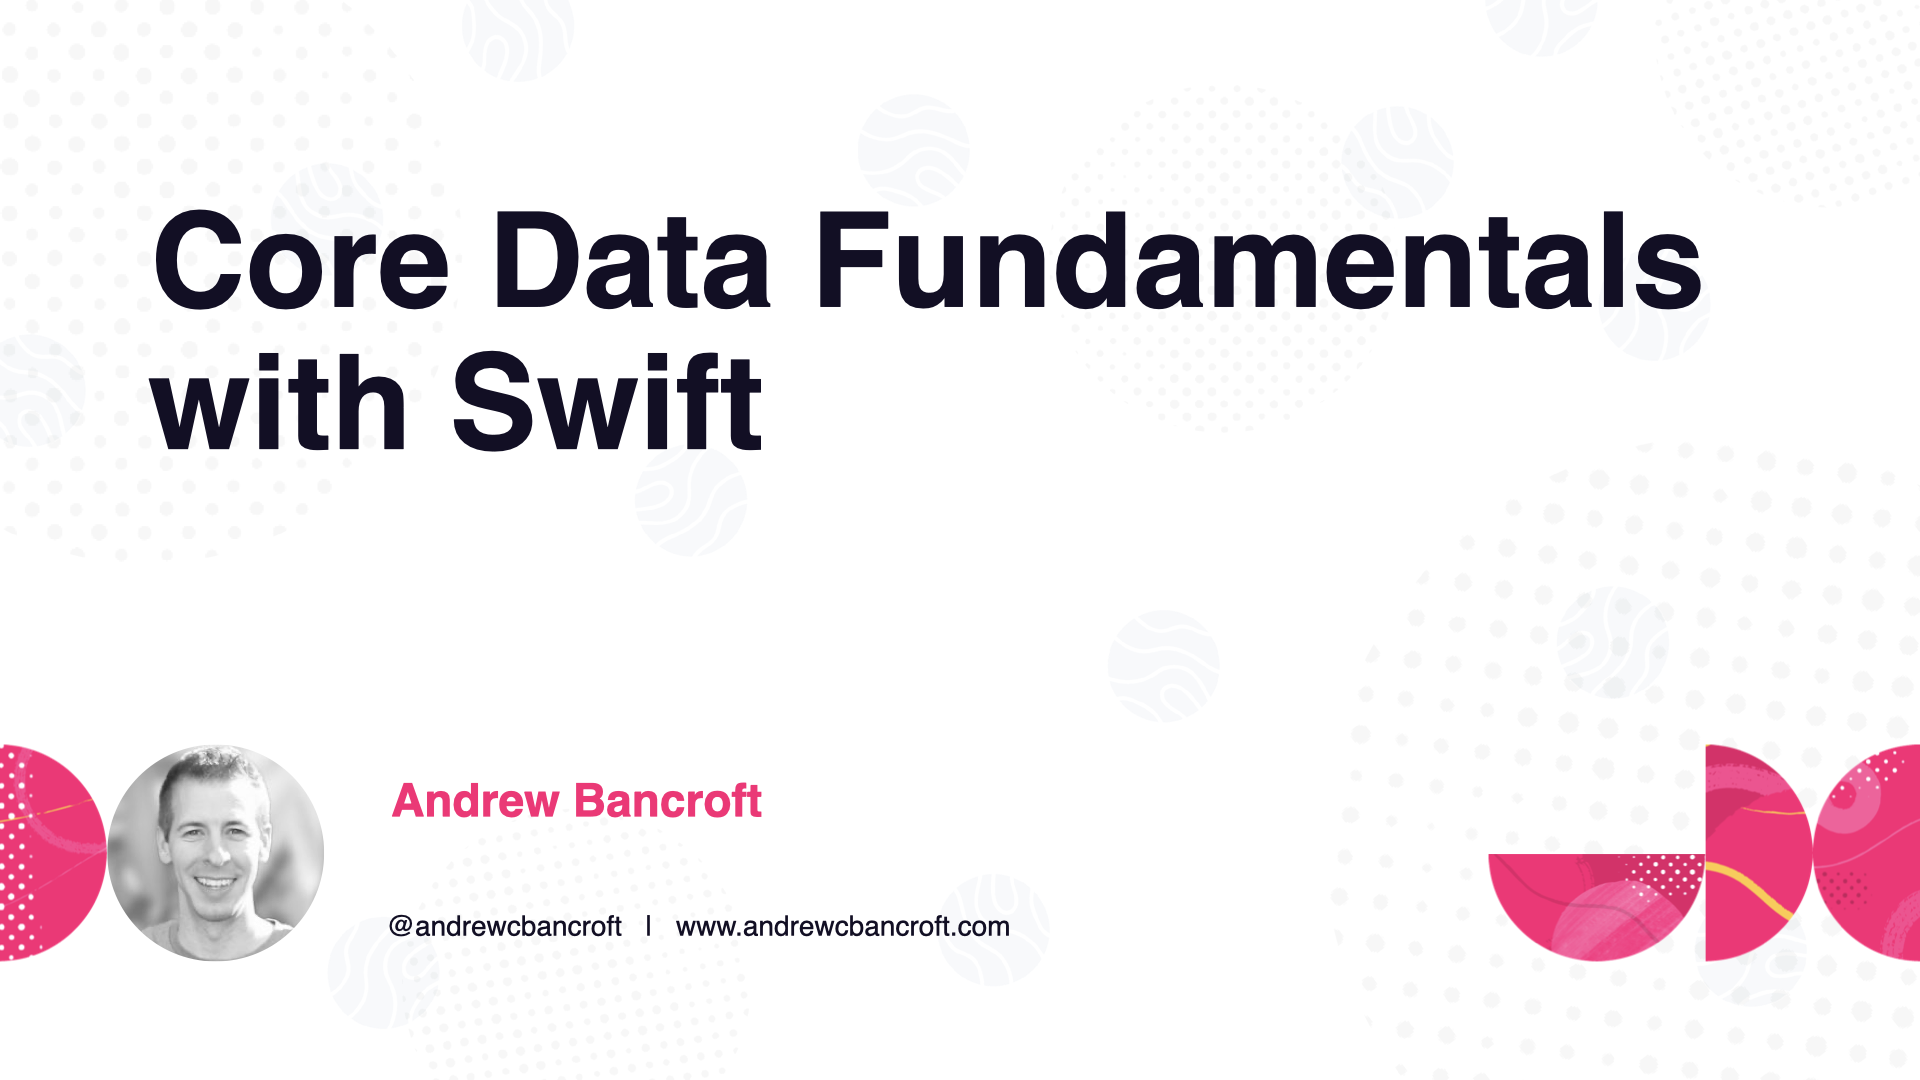 Core Data Fundamentals with Swift